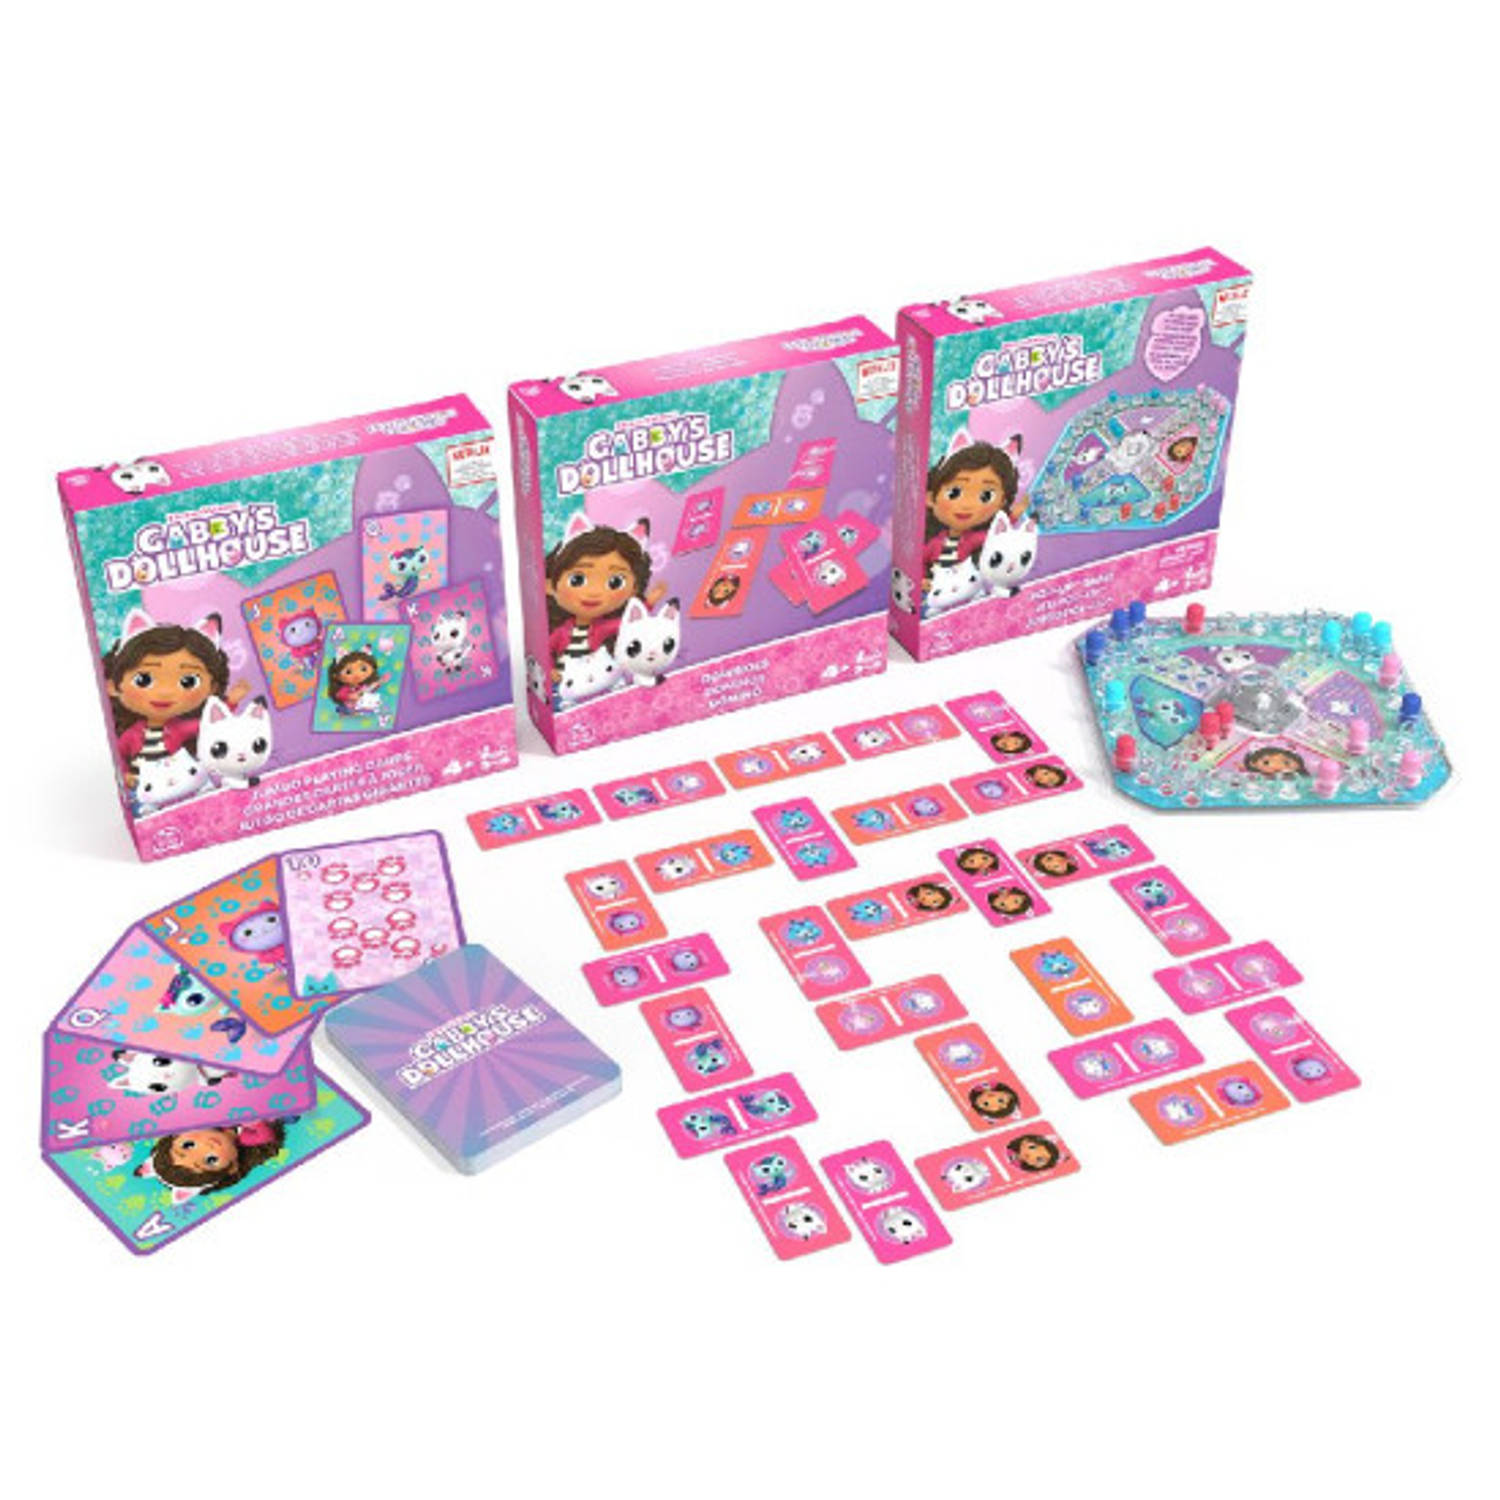 Gabby's Dollhouse Bordspellen 3-Pack Kinderspel